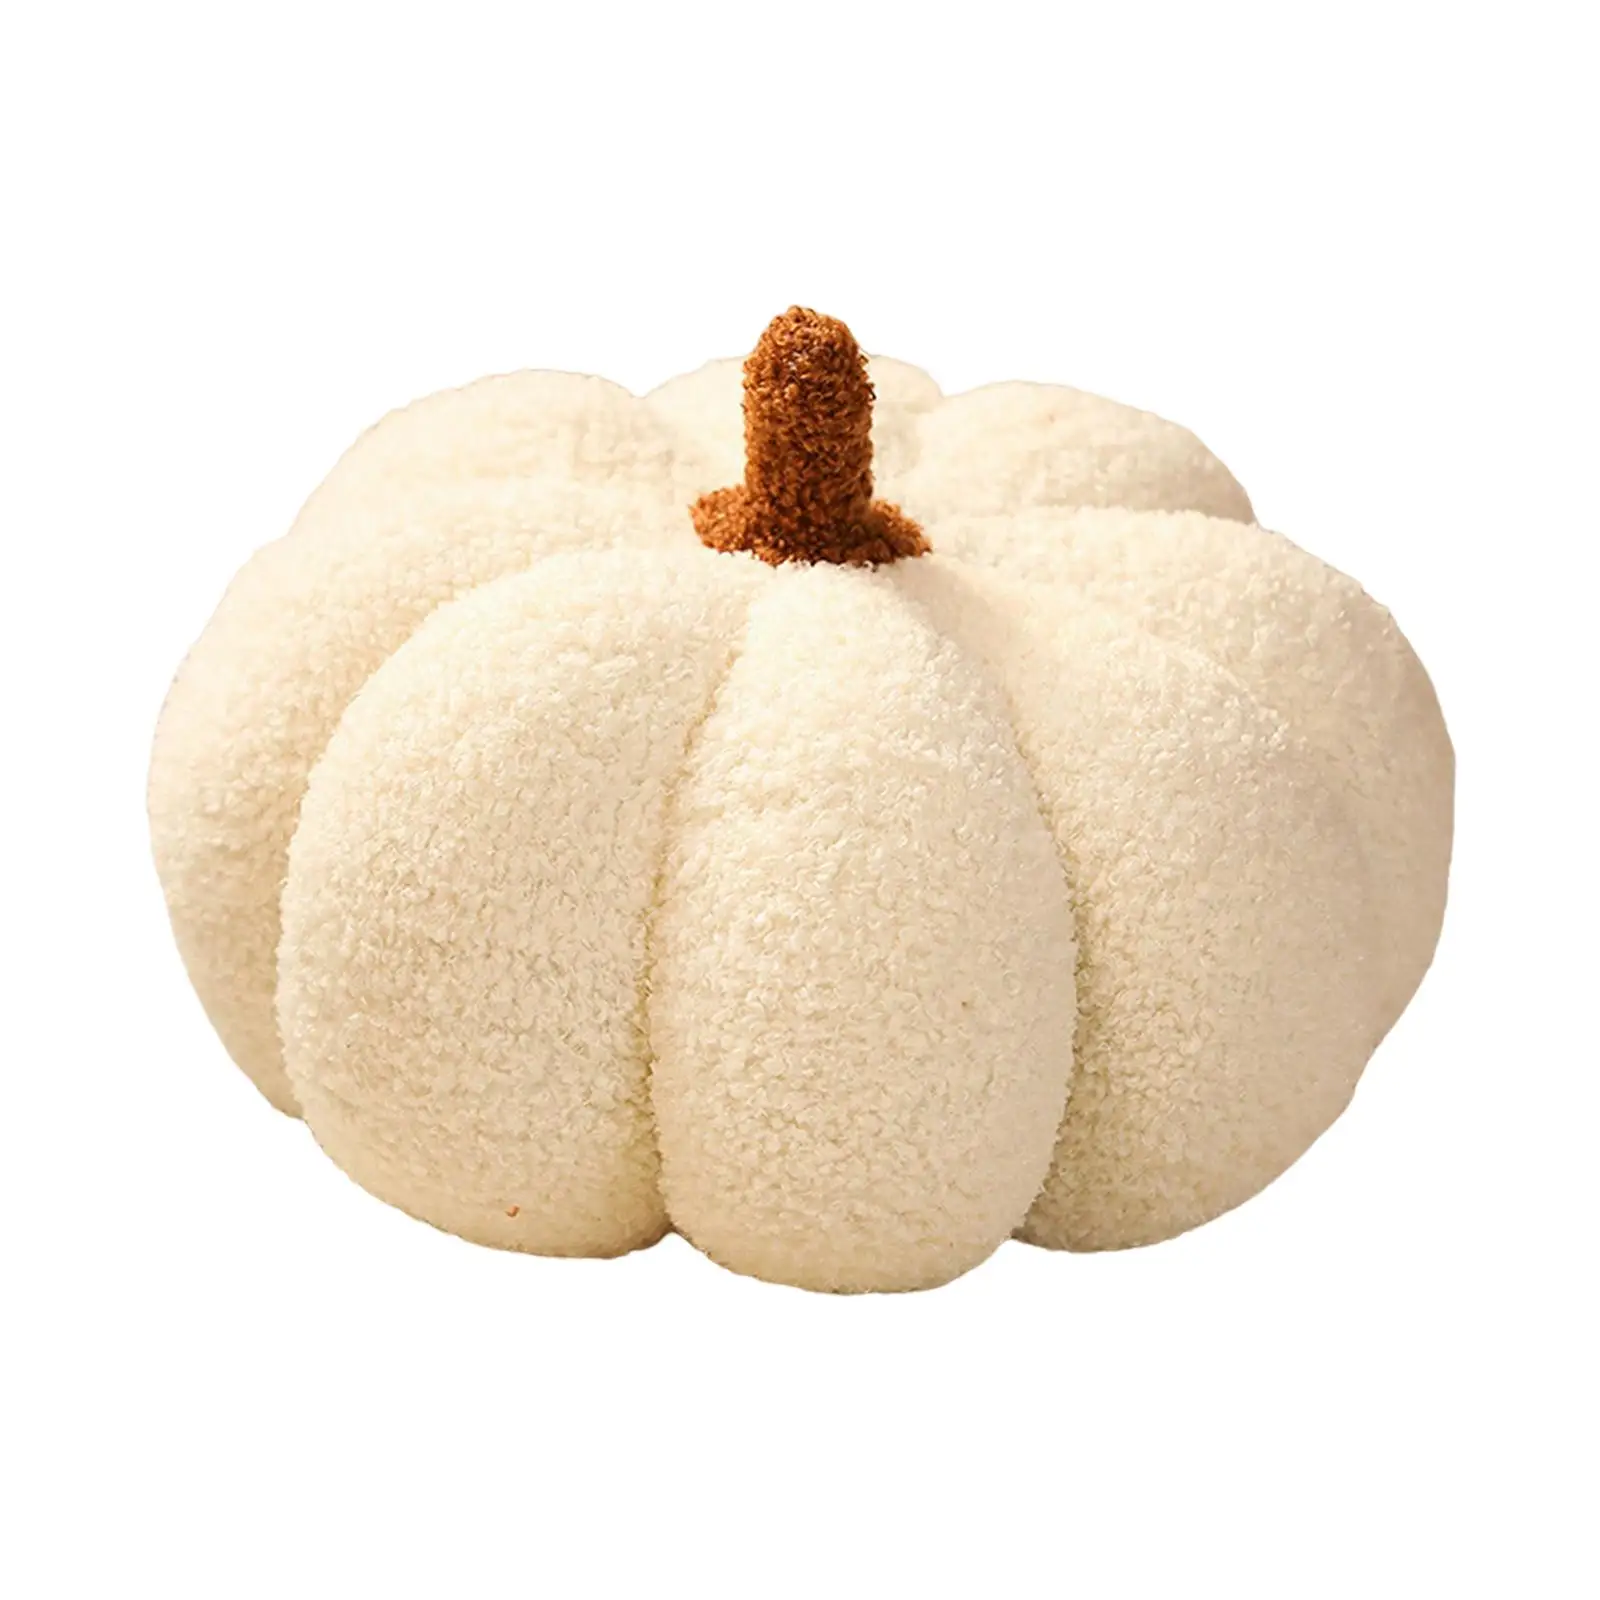 Pumpkin Throw Pillow Multi Purpose convenient Decorative for Halloween Birthday